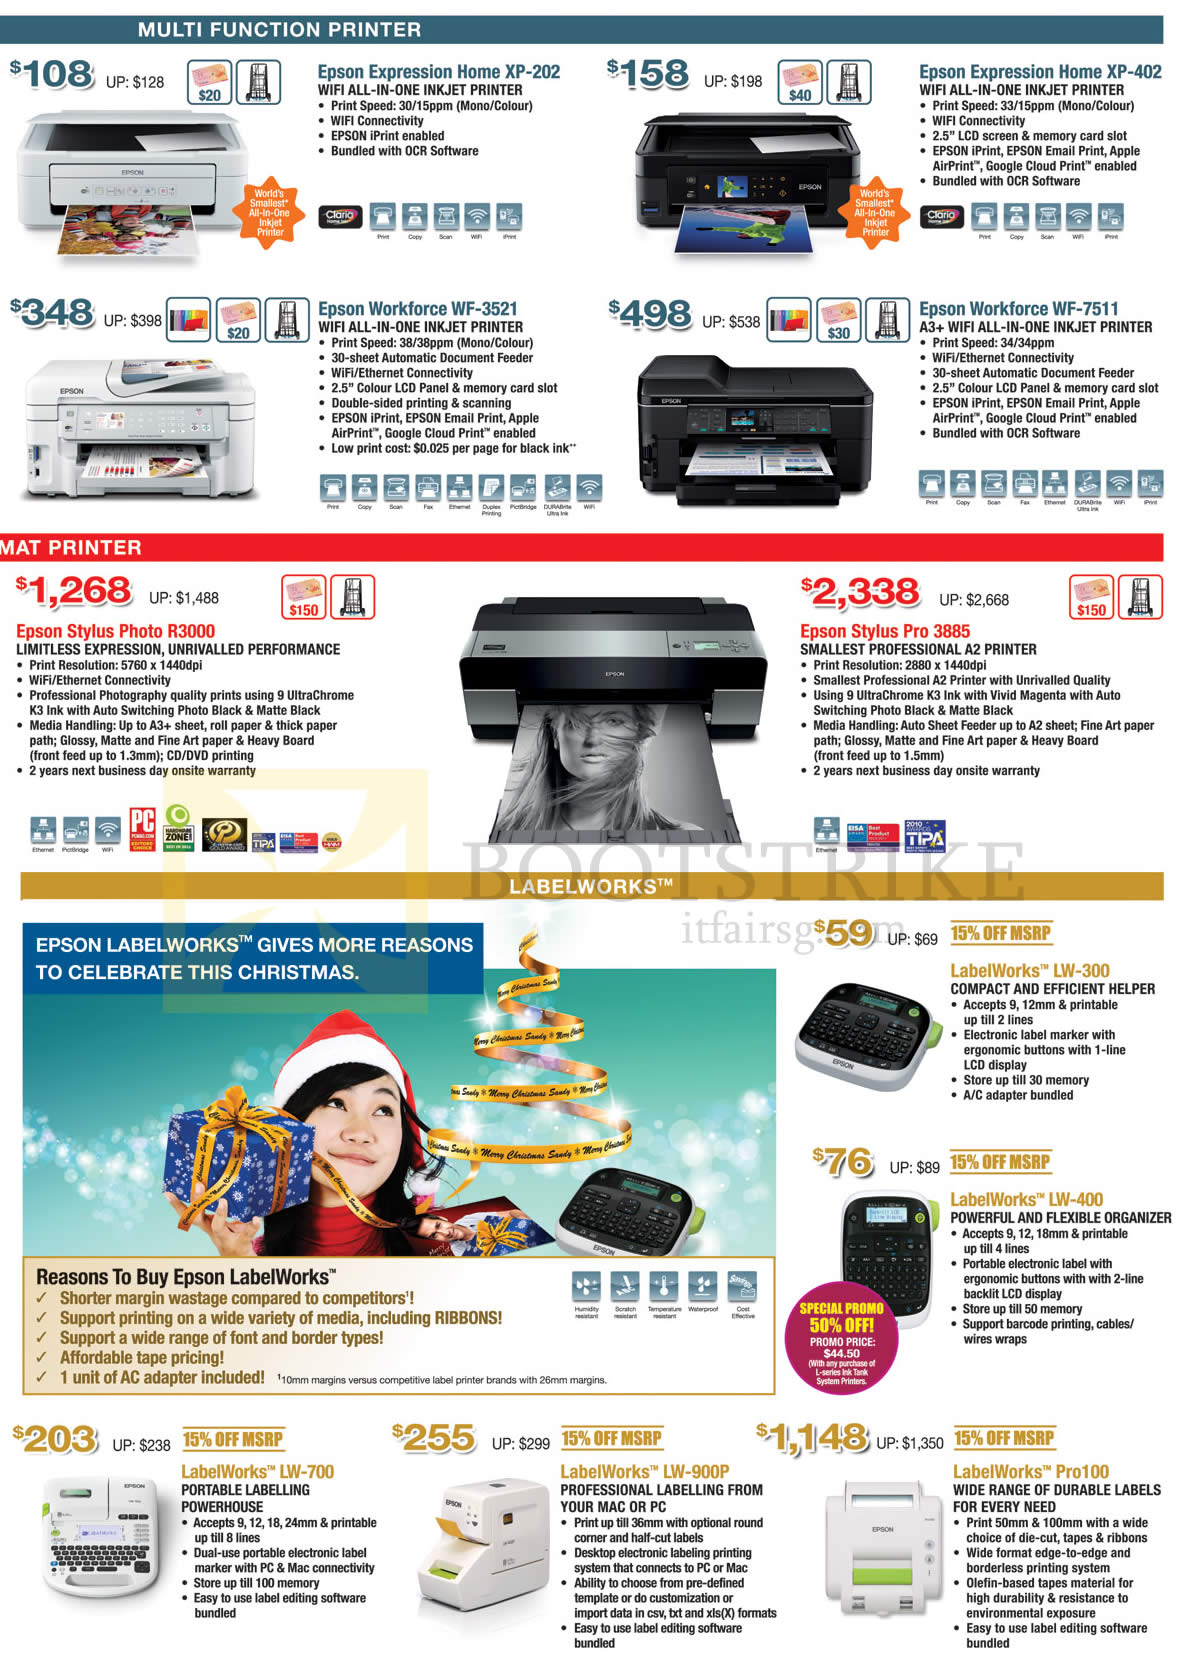 SITEX 2013 price list image brochure of Epson Printers, Labellers, XP-202, XP-402, Workforce Wf-3521, WF-7511, R3000, Pro3885, LabelWorks LW-300, 400, 700, 900P, Pro100